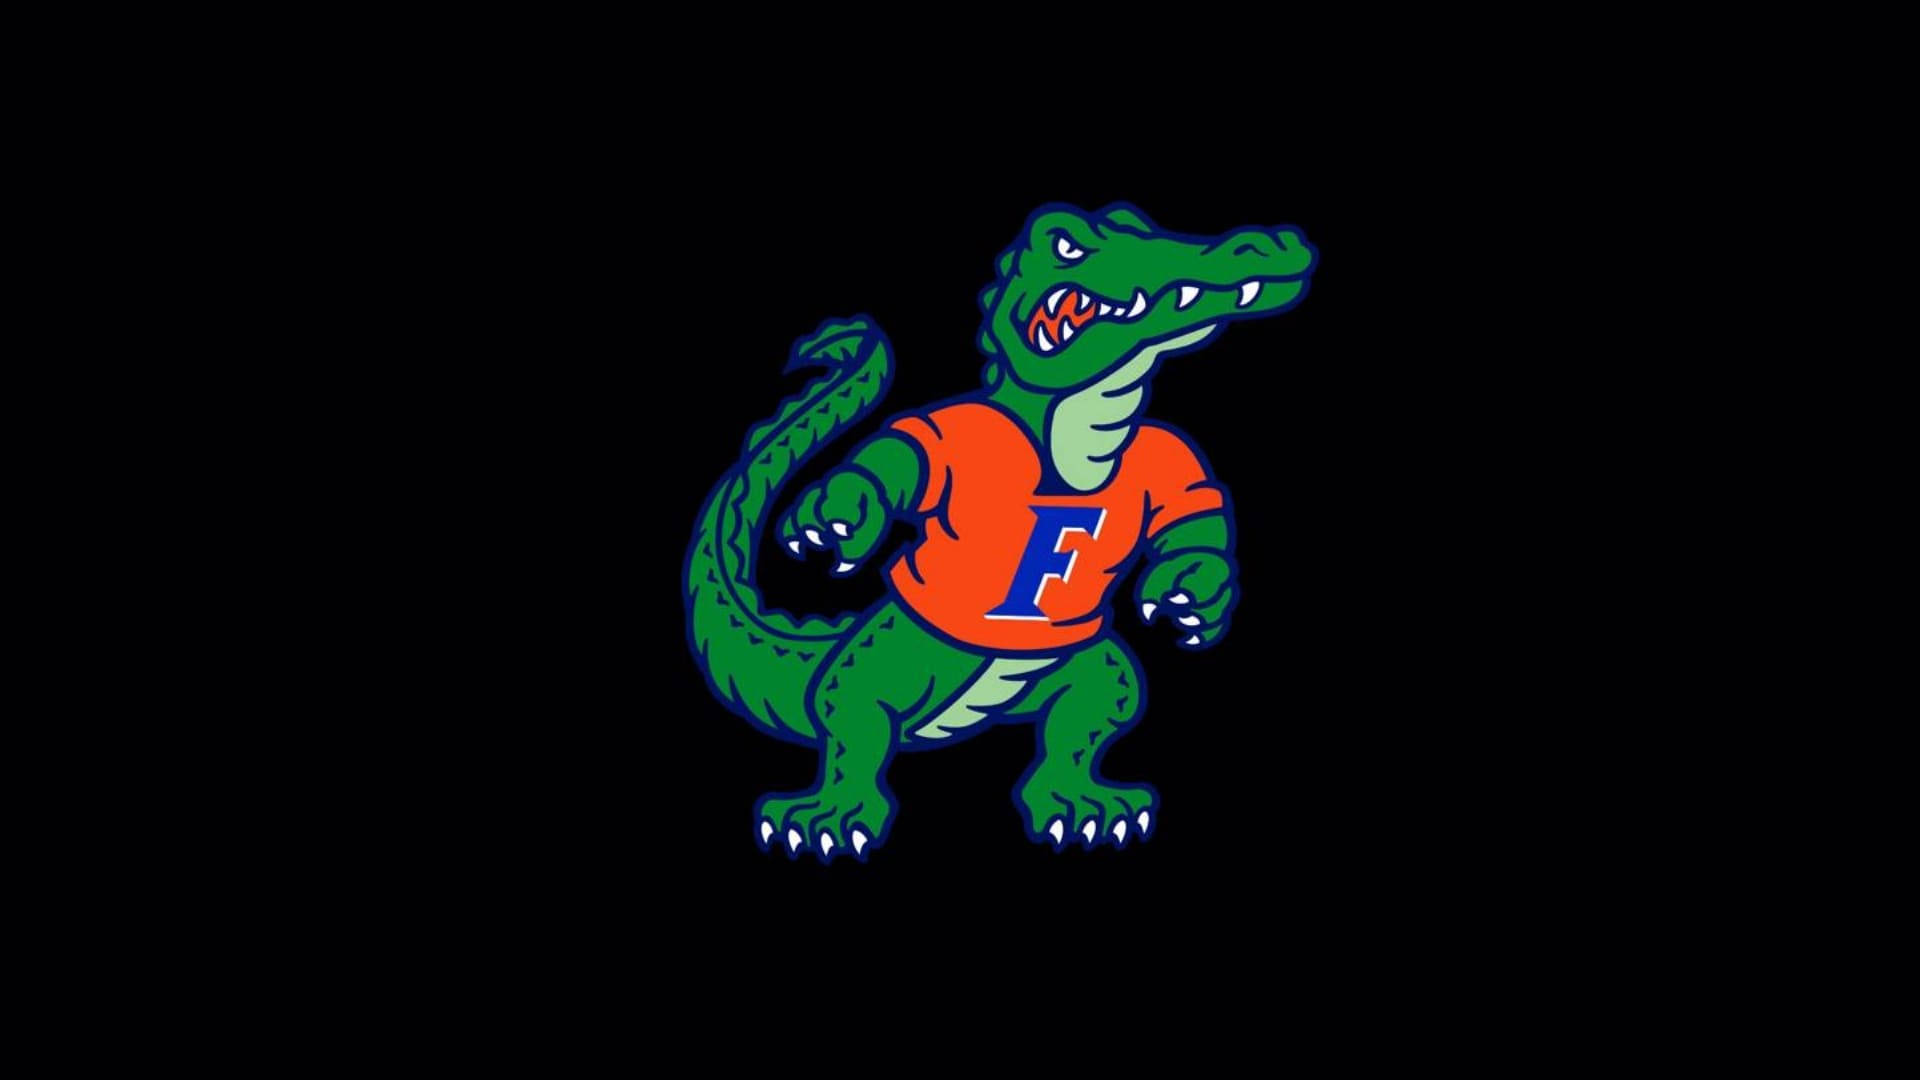 2. Download This Cool Florida Gators Albert Wallpaper For Your Computer Or Mobile Device! - Lade Diesen Coolen Florida-gators-albert-hintergrund Auf Deinen Computer Oder Dein Mobilgerät Herunter! Wallpaper